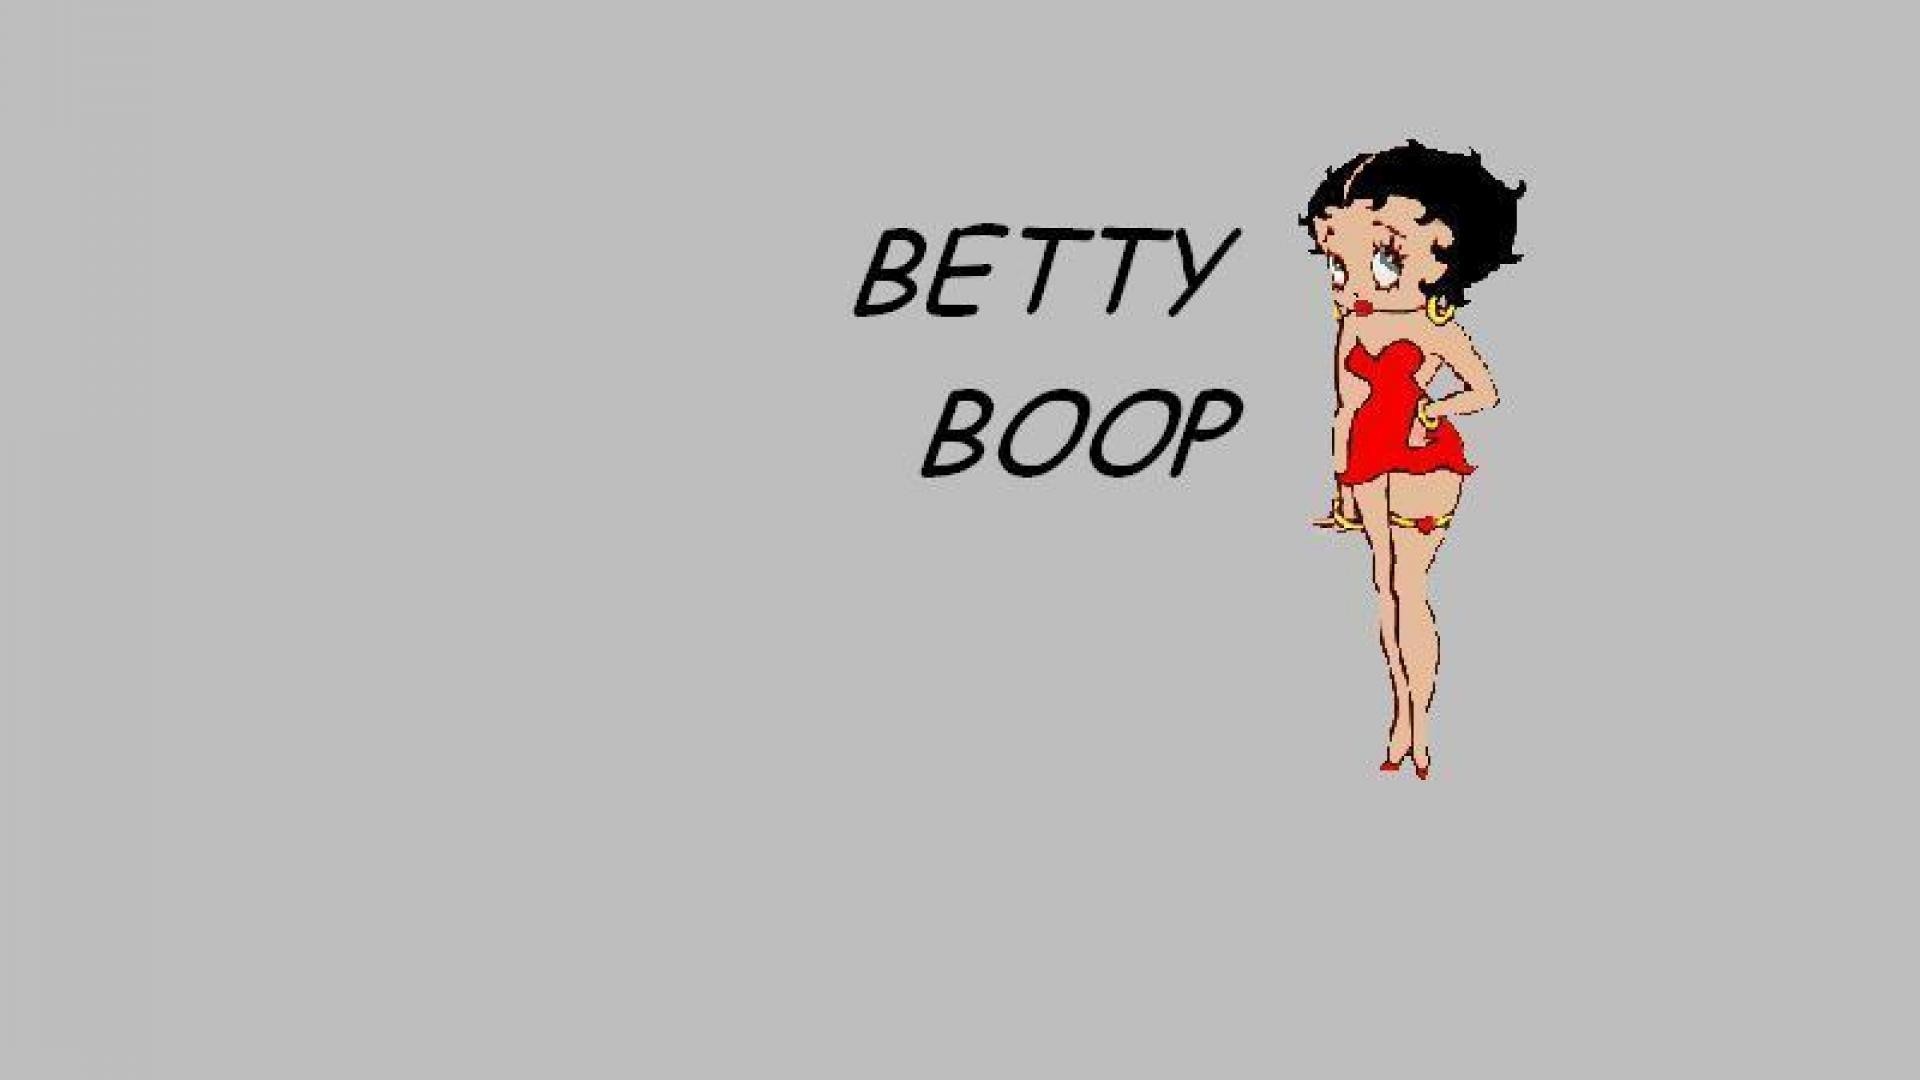 Betty Boop Wallpaper HD Free Download Betty Boop Wallpaper HD